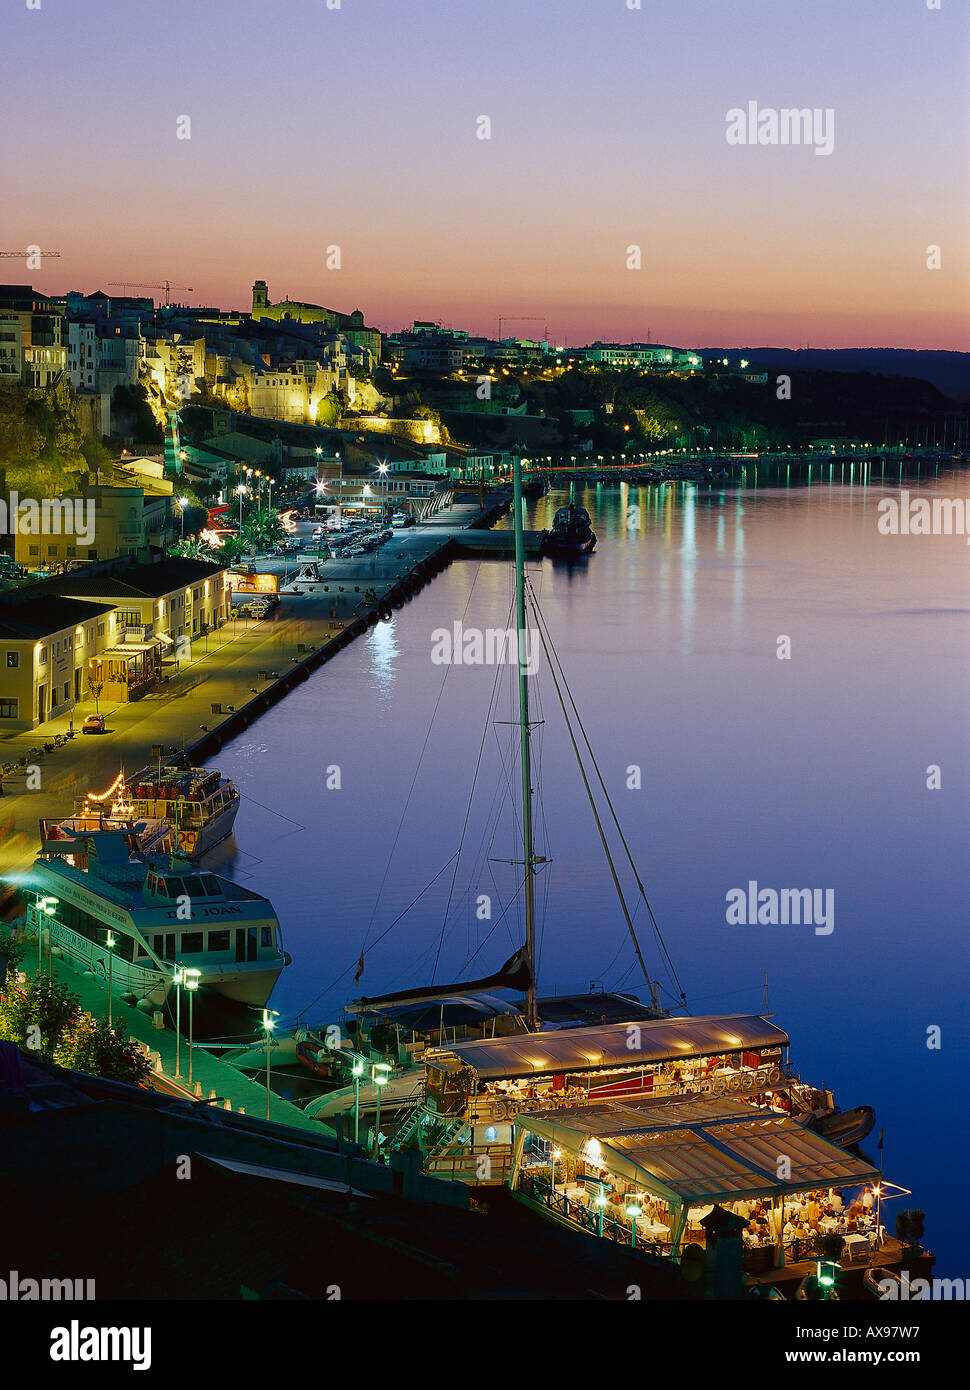 Moll de Ponent, dock area, floating restaurant, boats, harbour, townscape of Maó, Mahon, Menorca, Minorca, Balearic Islands, Med Stock Photo